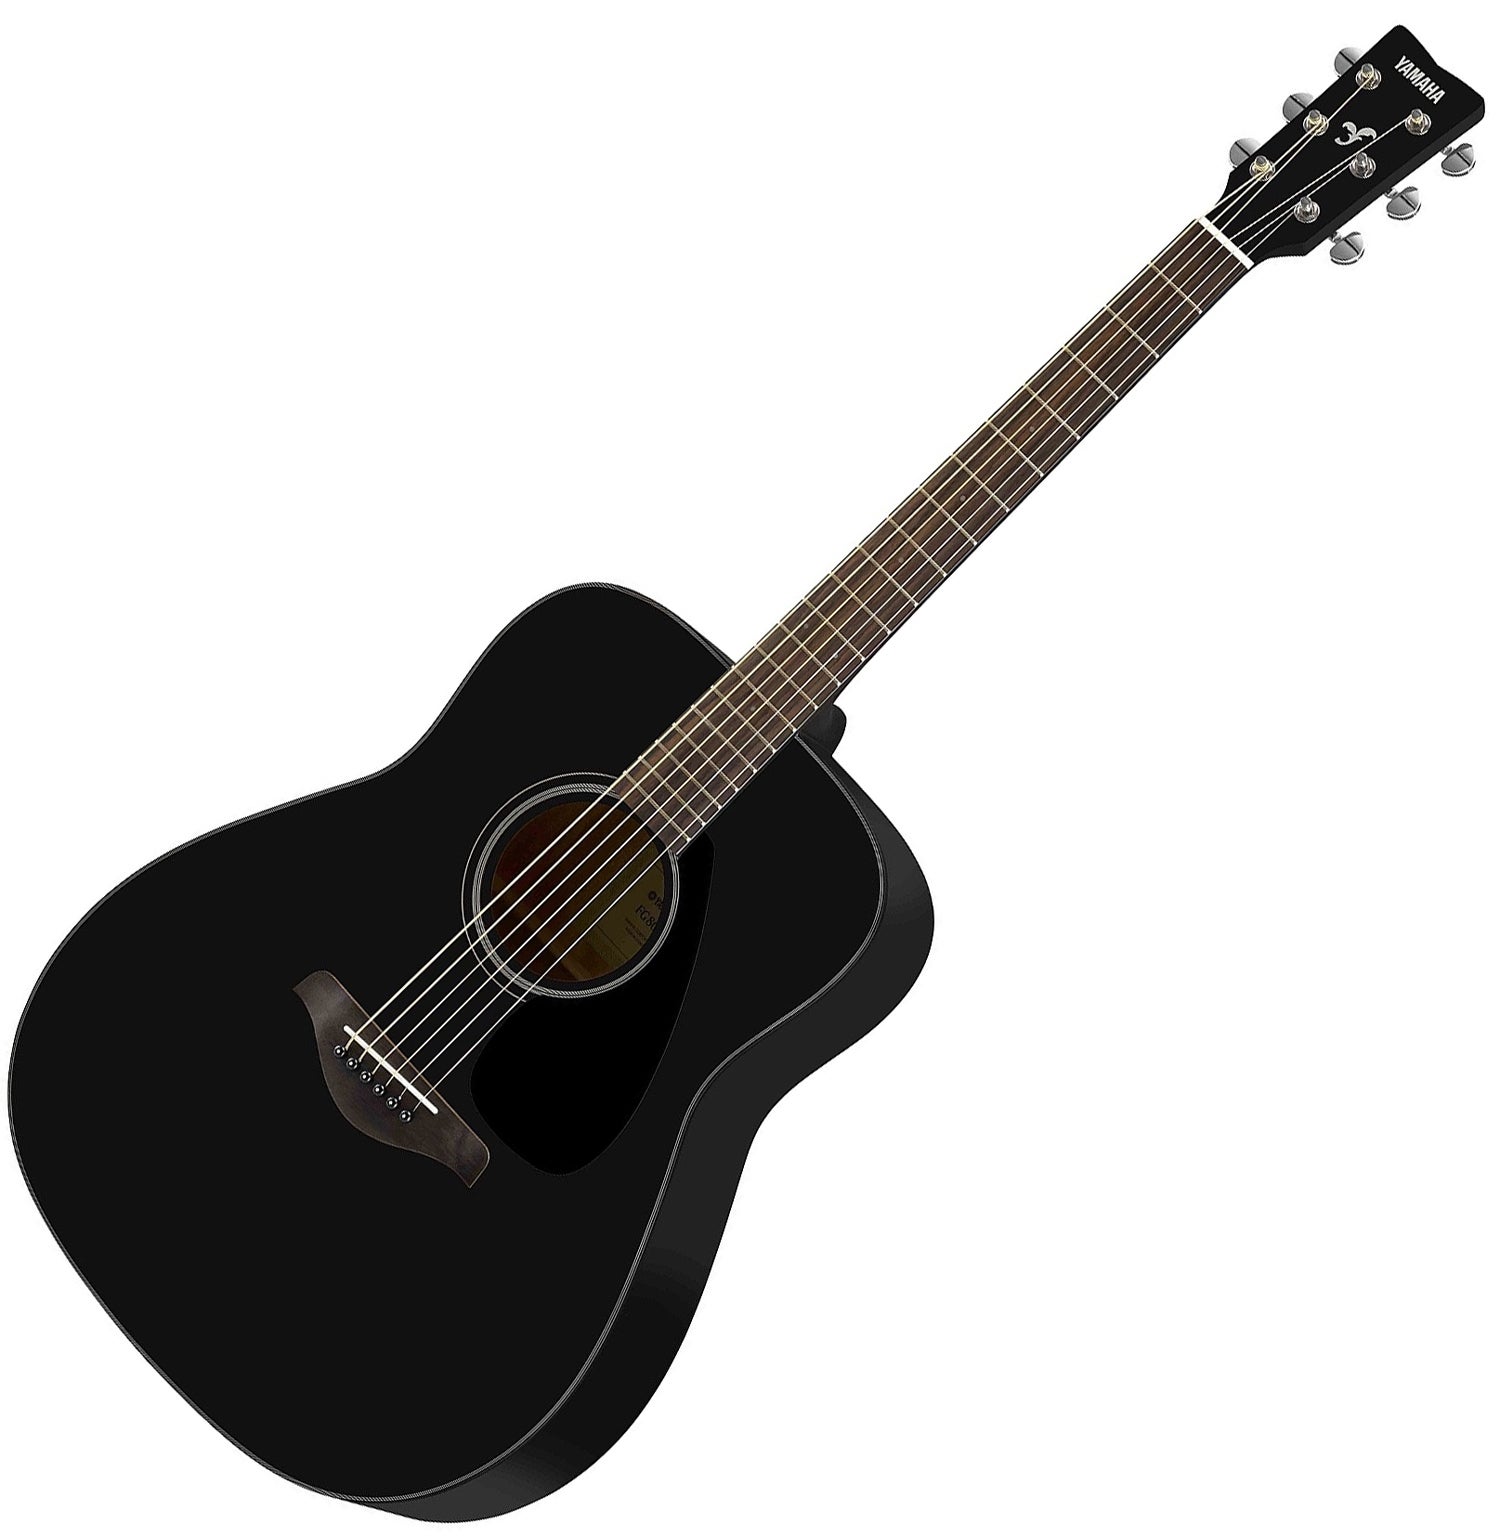 Yamaha Fg80 Bl Solid Top Acoustic Guitar, Black | Music Works